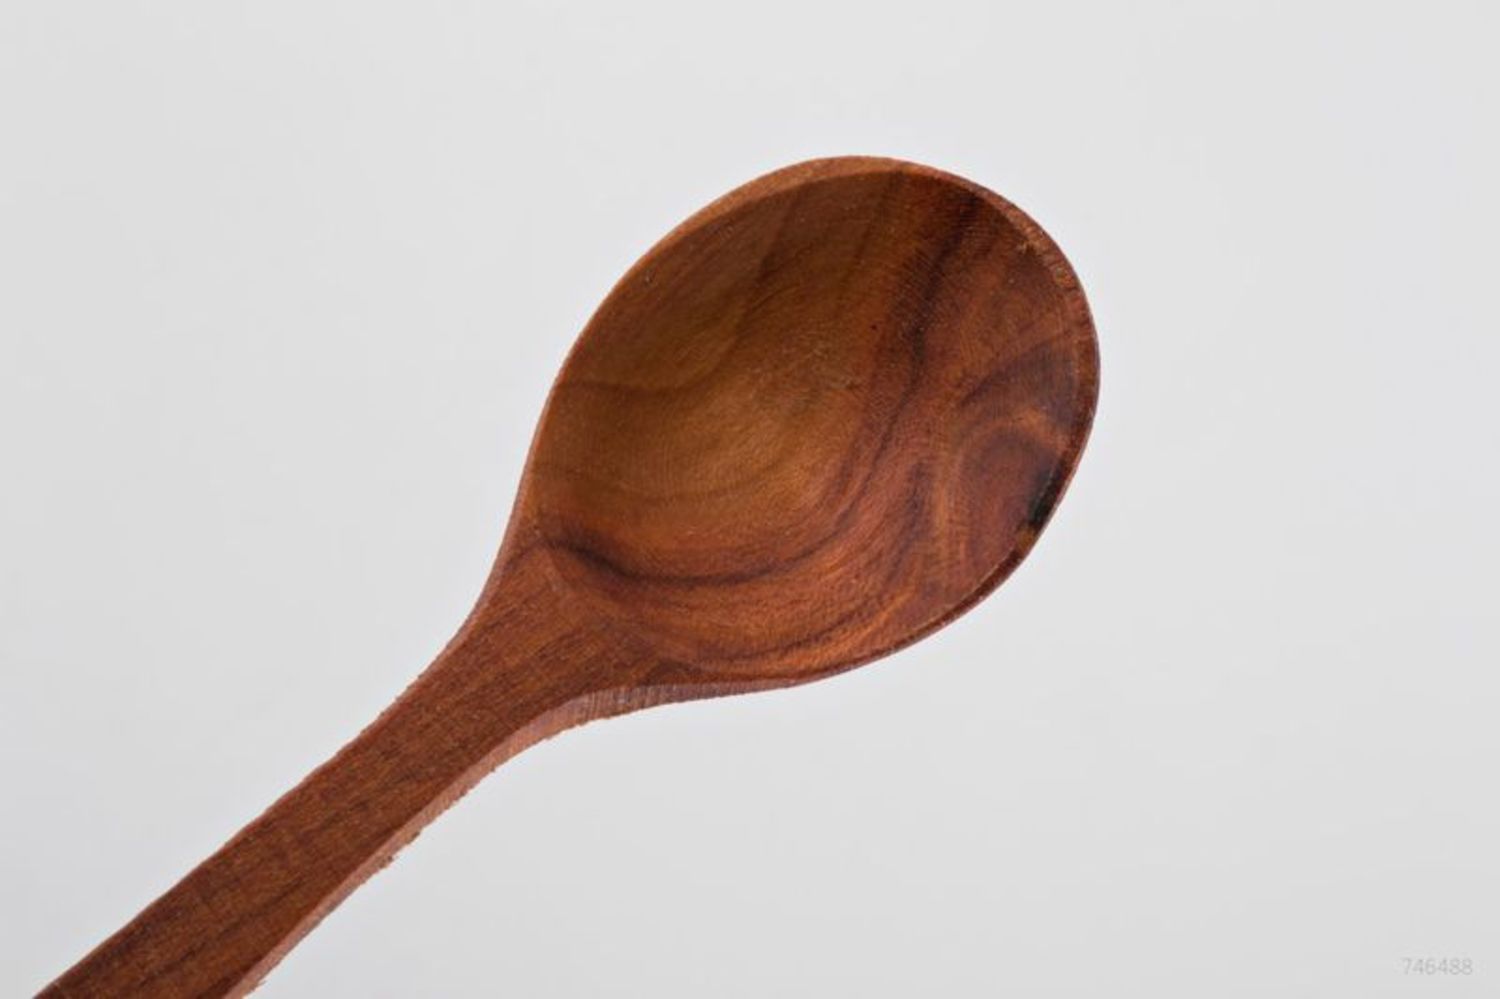 Wooden spoon photo 4